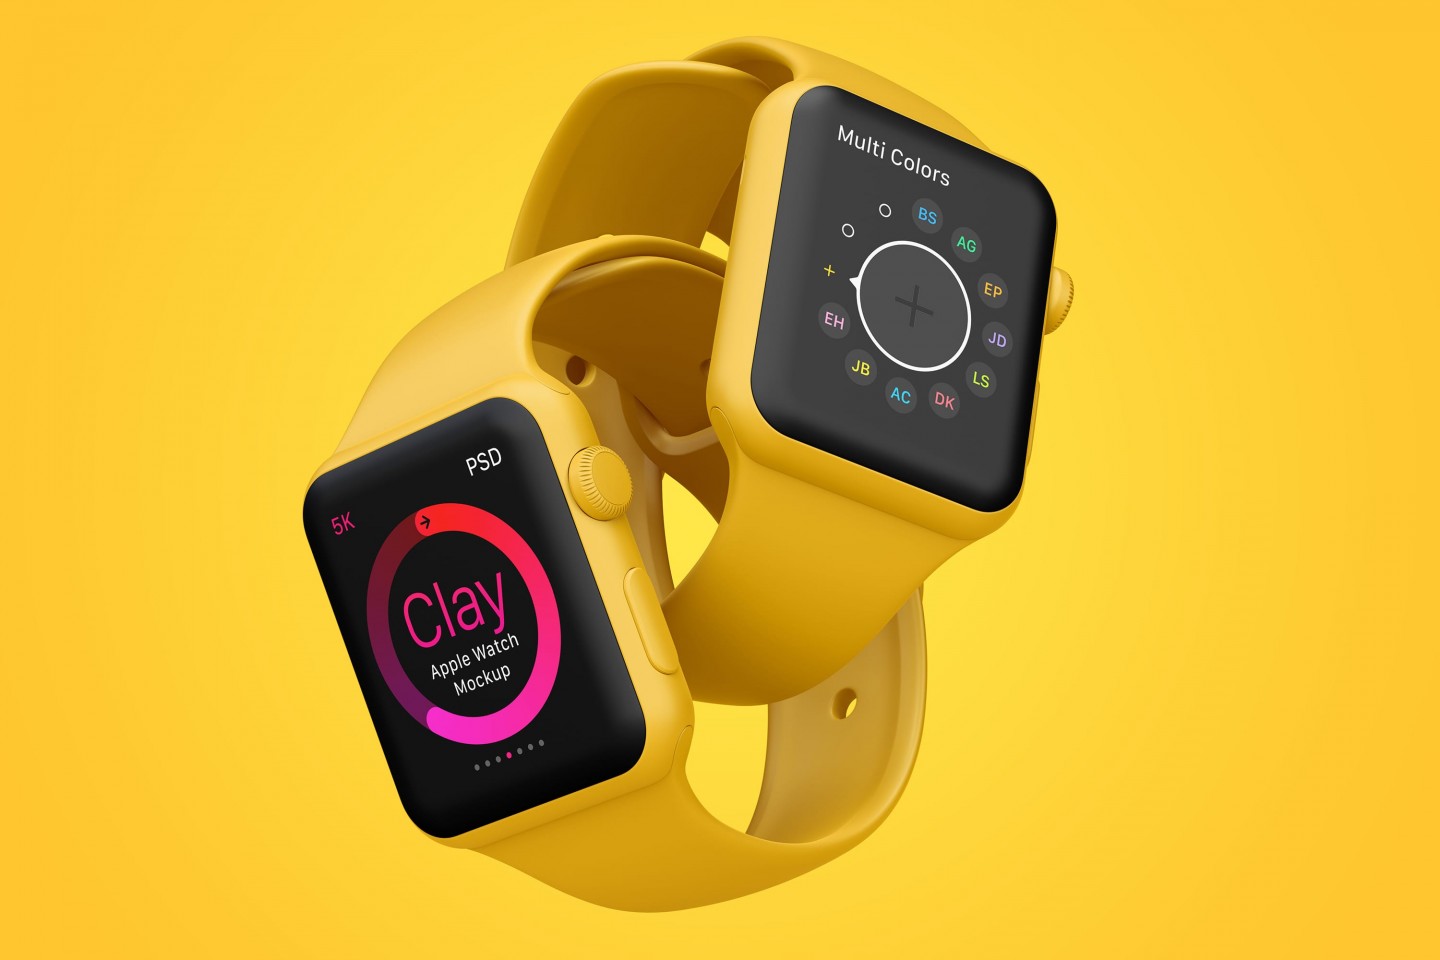 Clay-Apple-Watch-PSD-Mockup-0